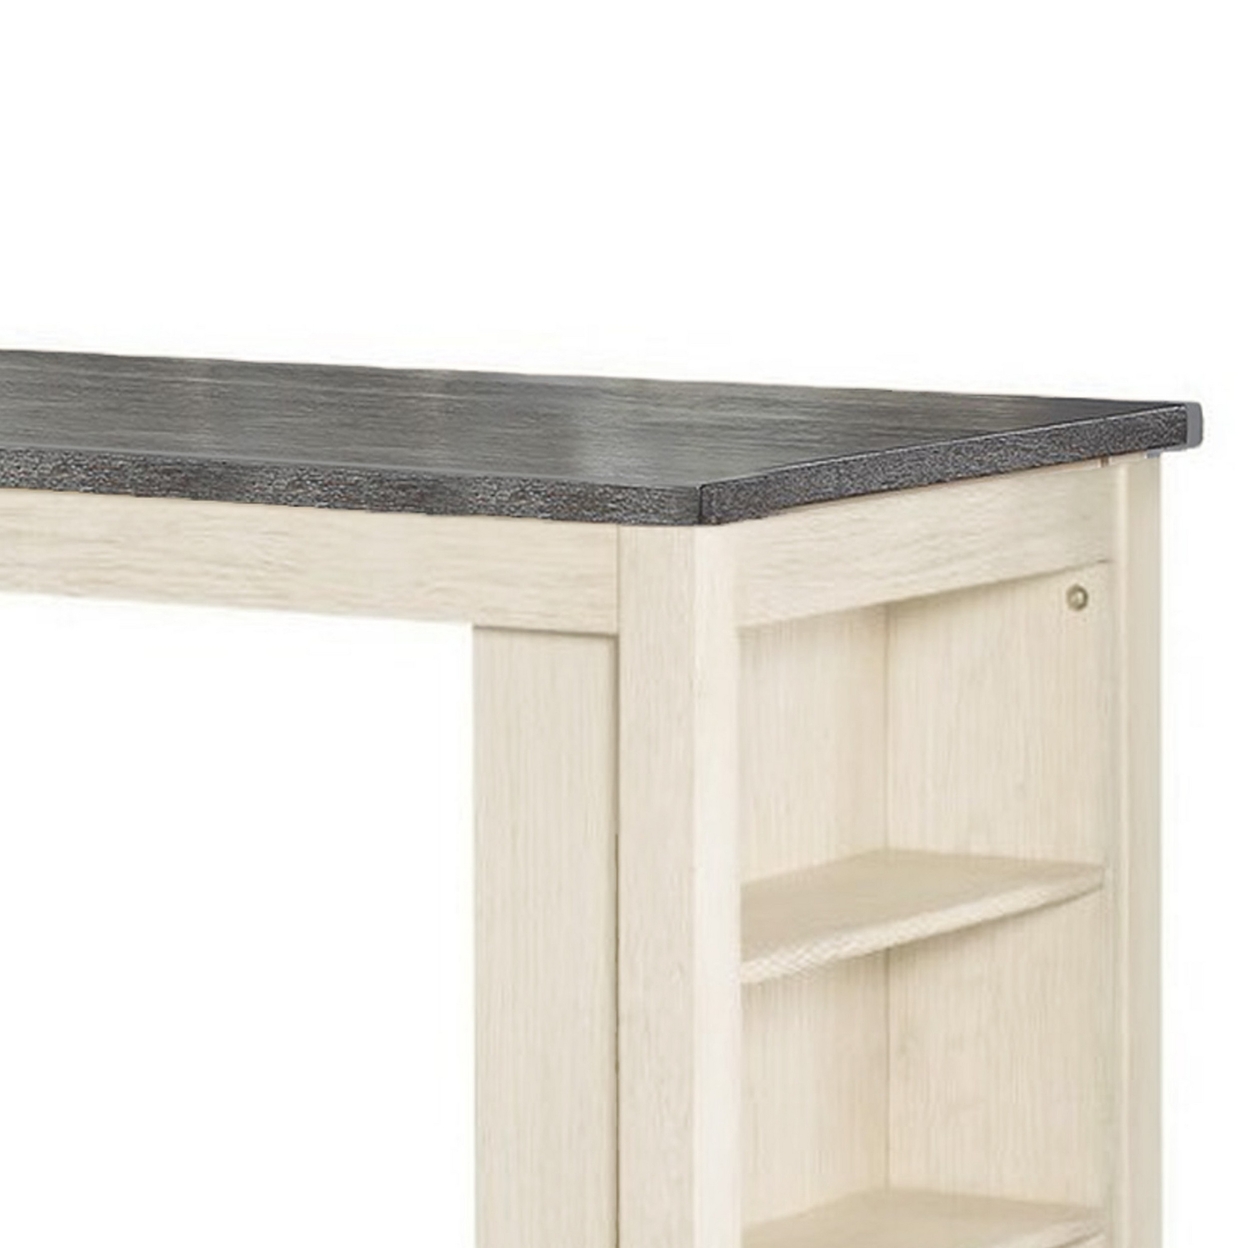 Joss 60 Inch Cottage Counter Height Table, 2 Tone Wood, Gray Top Cream Base- Saltoro Sherpi